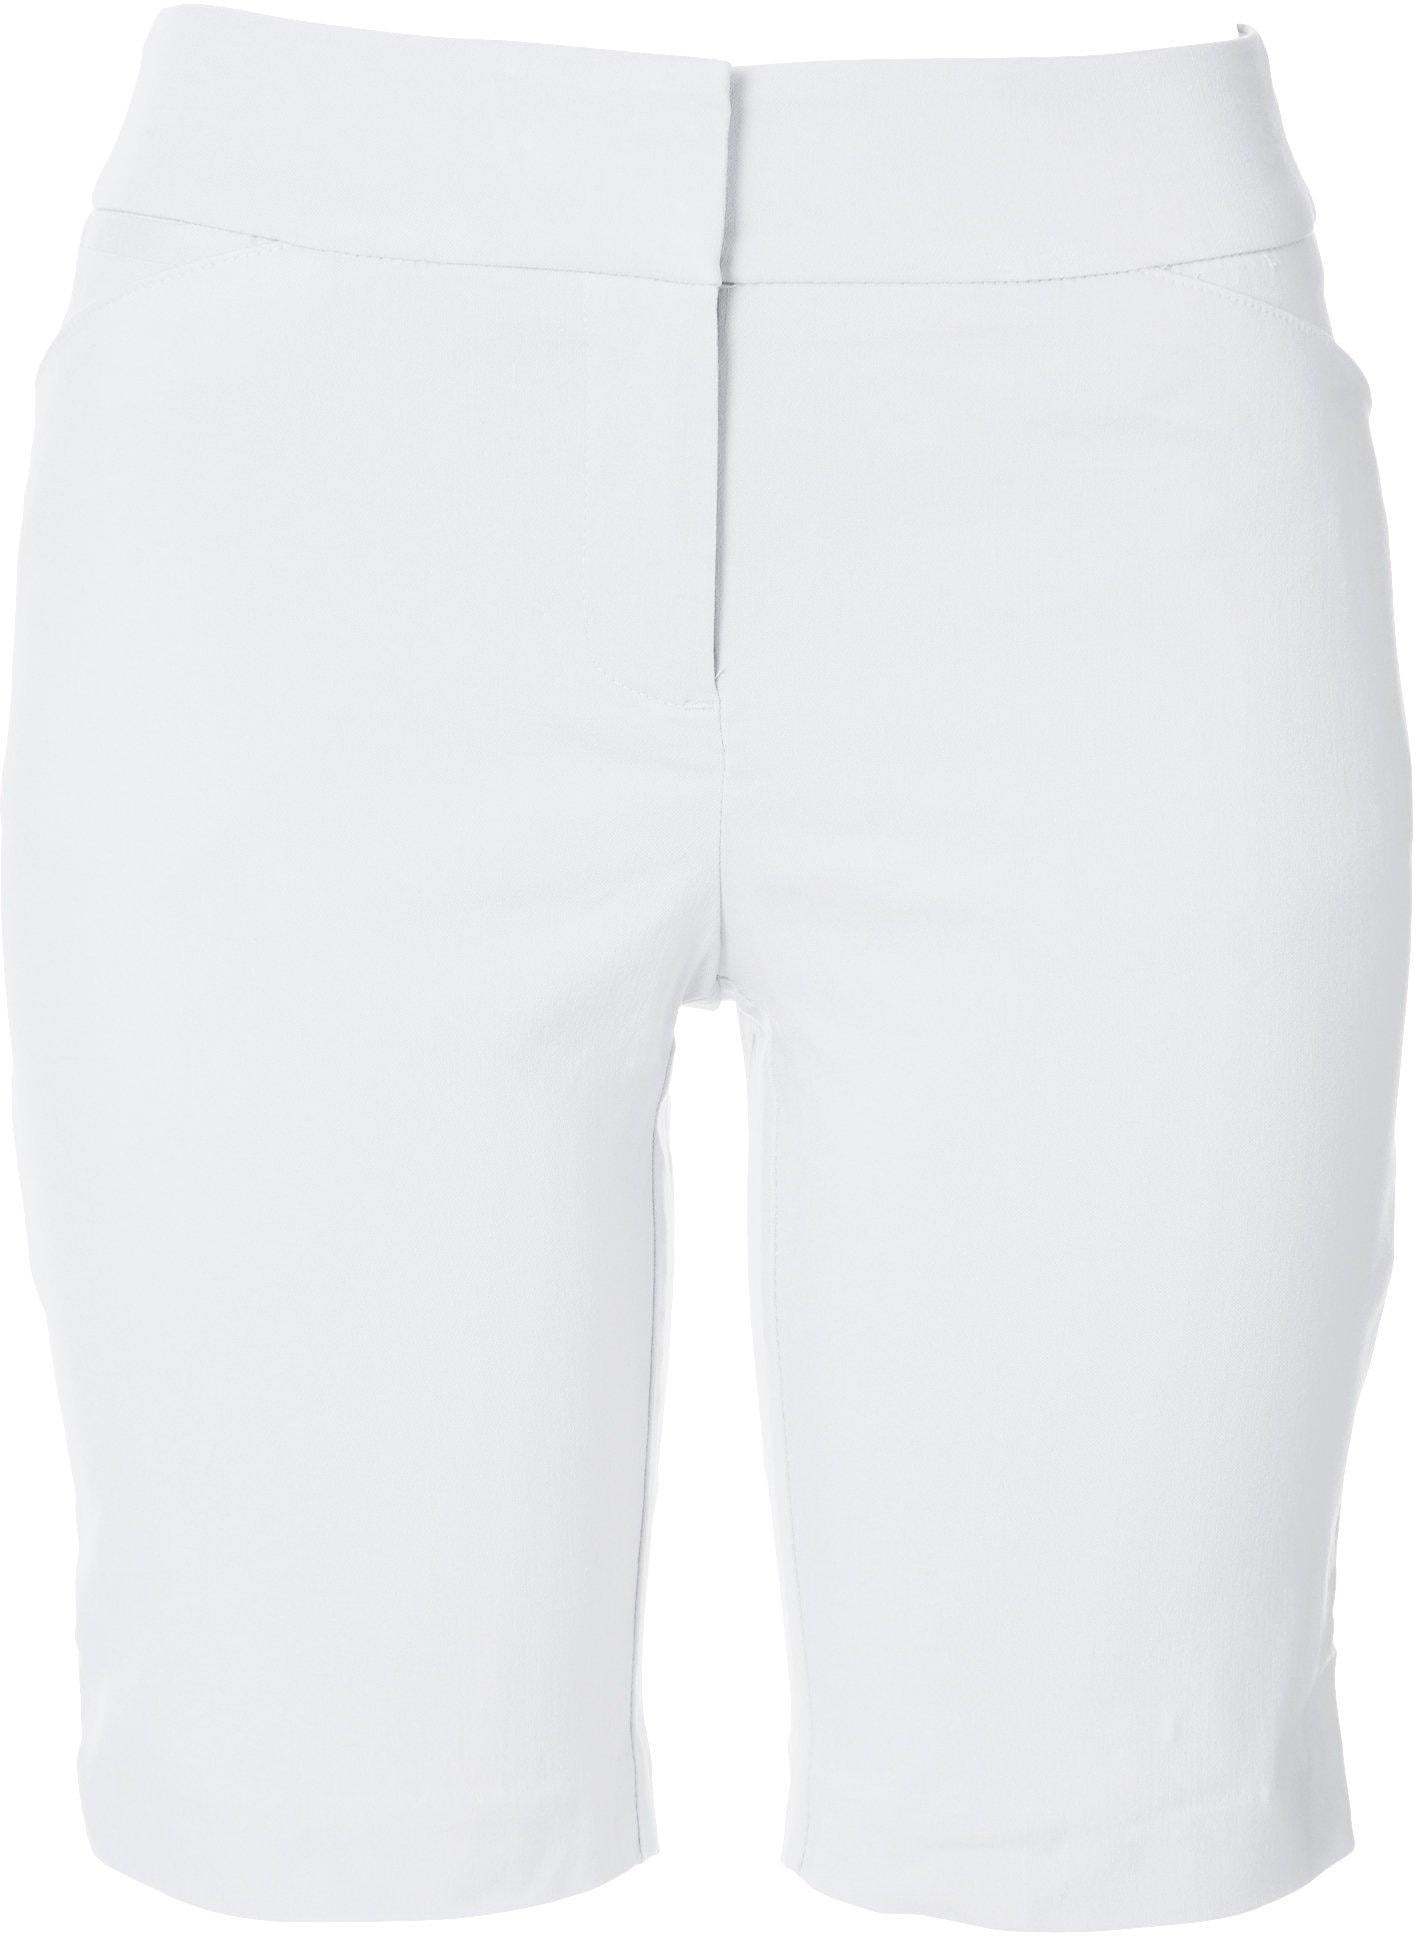 Attyre New York - ATTYRE Womens Solid Bermuda Shorts 10 White - Walmart ...